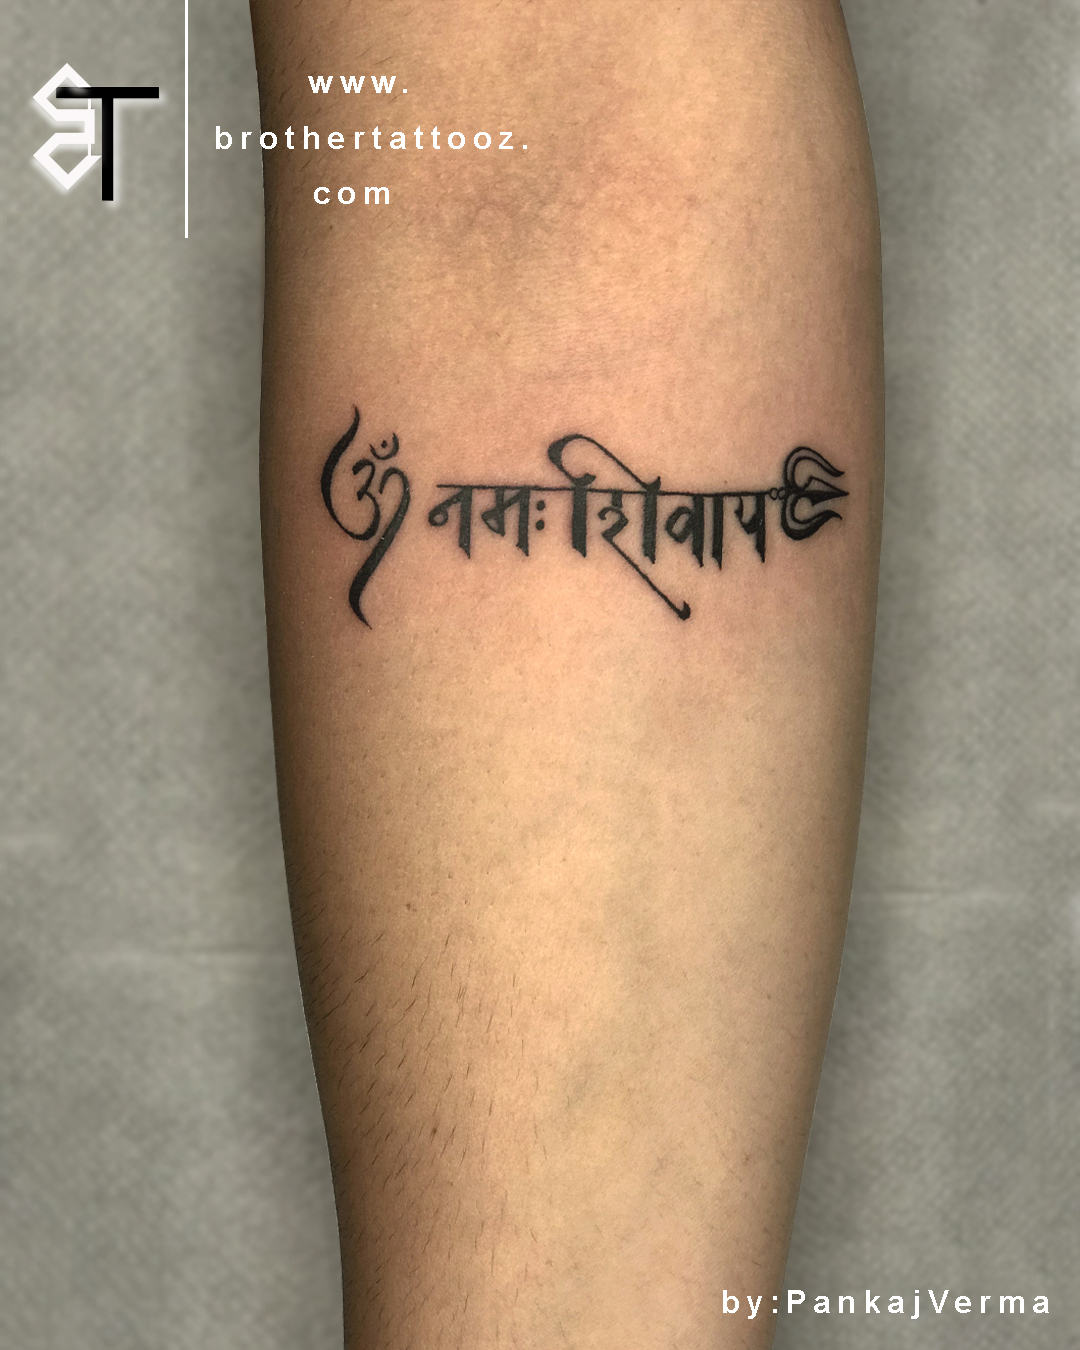 Pankaj Name Tattoos part2 #tattoo #shortfeed - YouTube